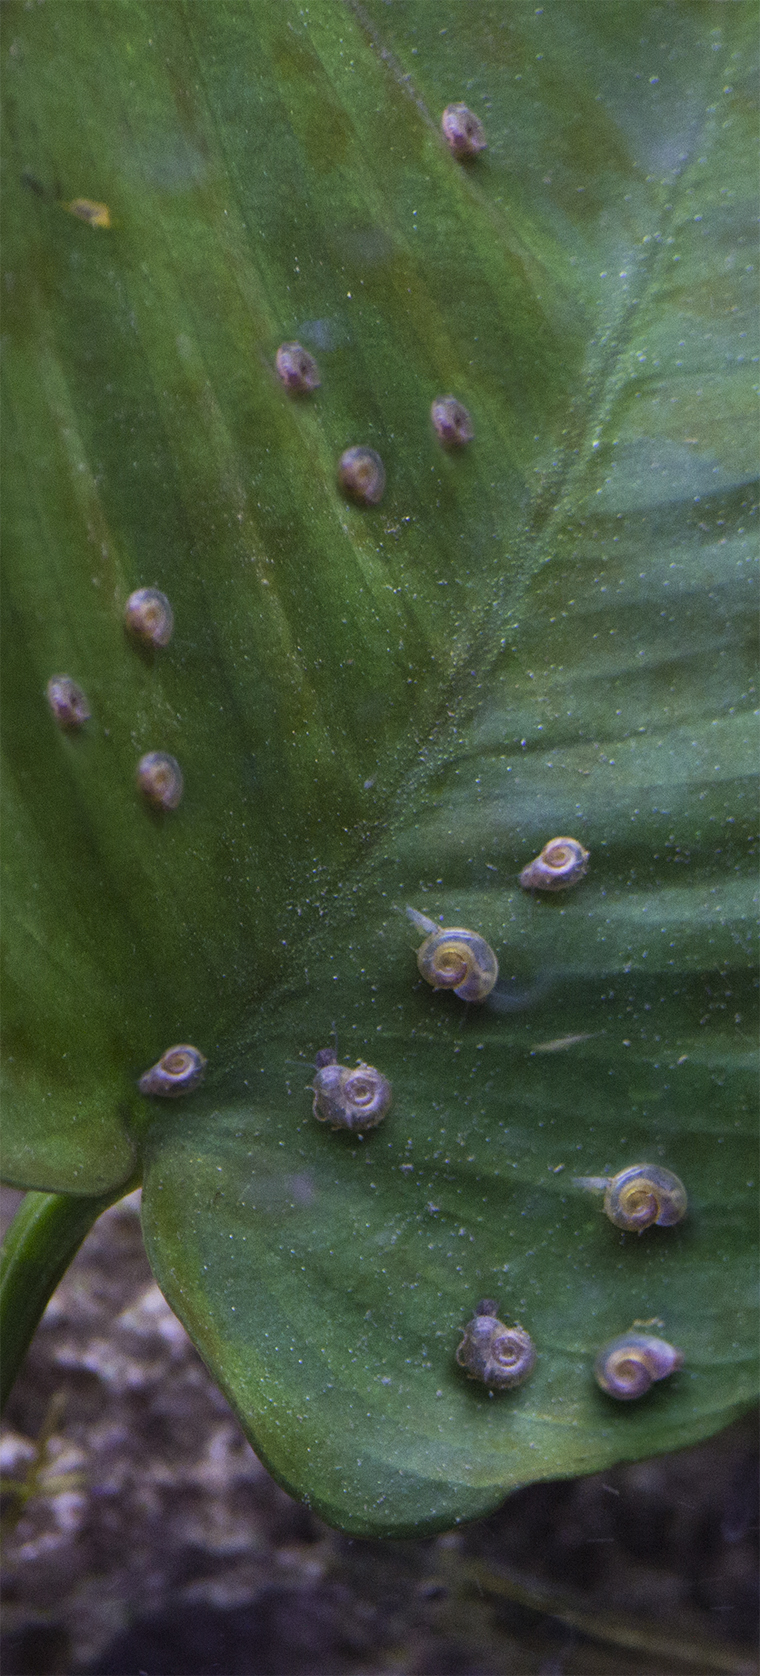 Plant leaf covered in small aquarium snails